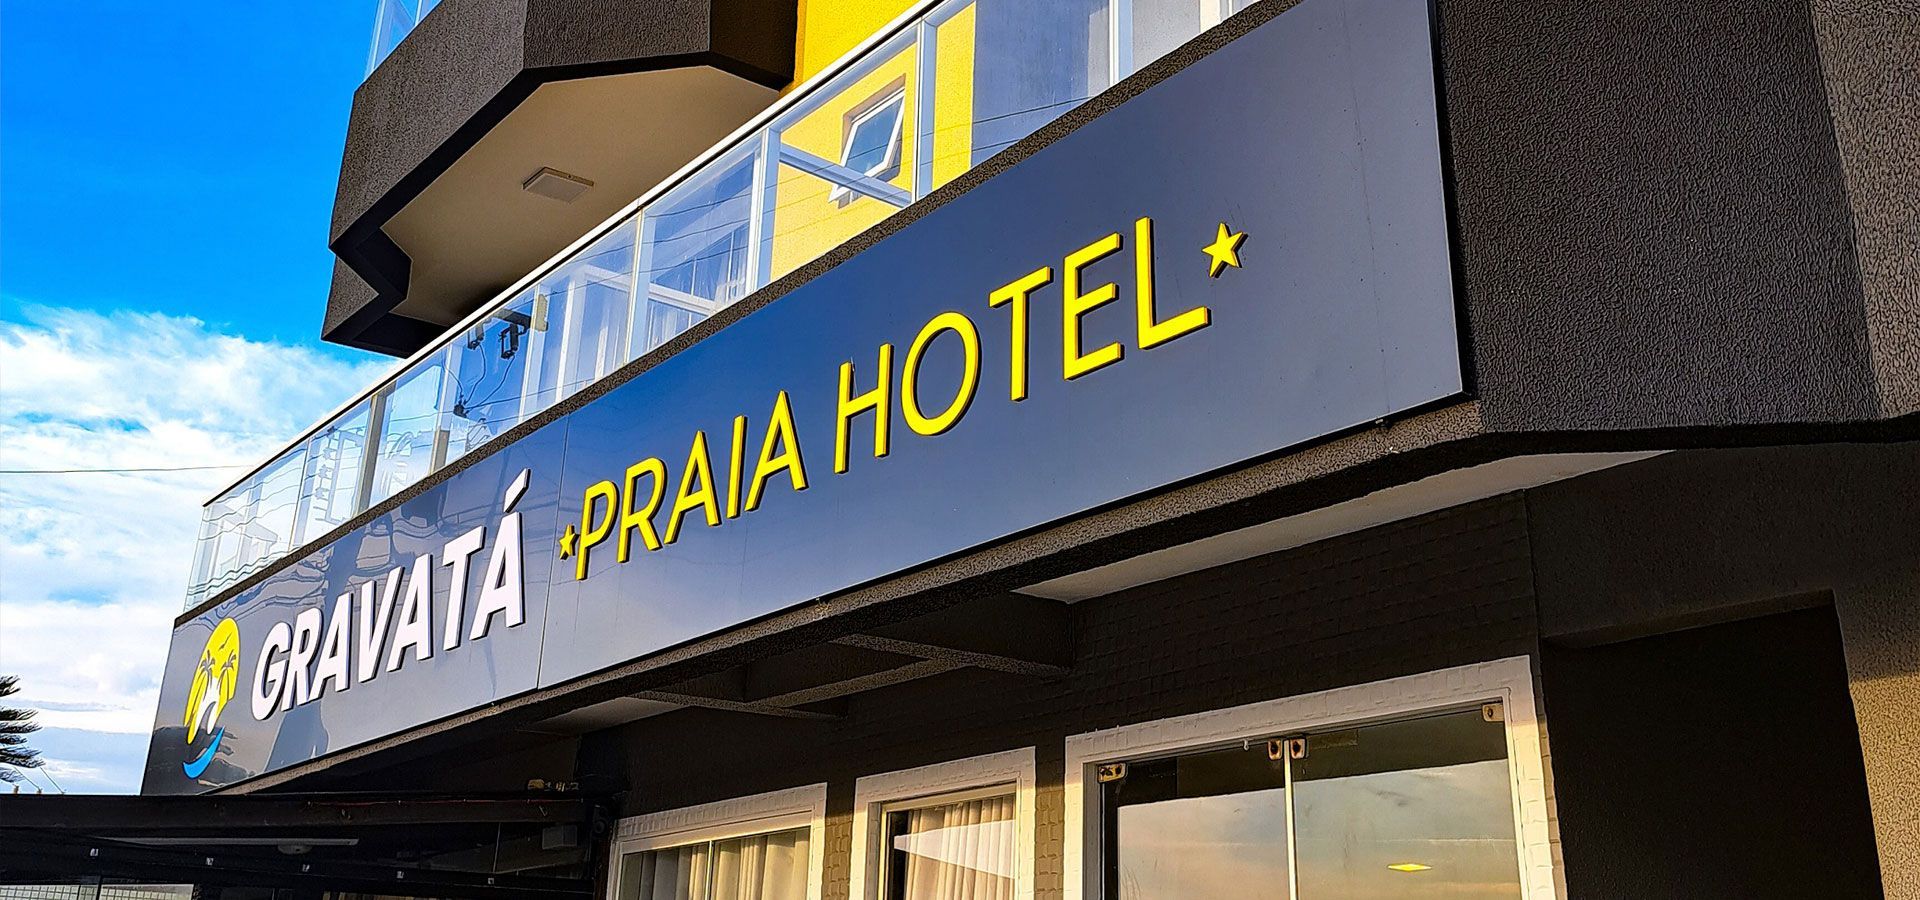 Gravatá Praia Hotel